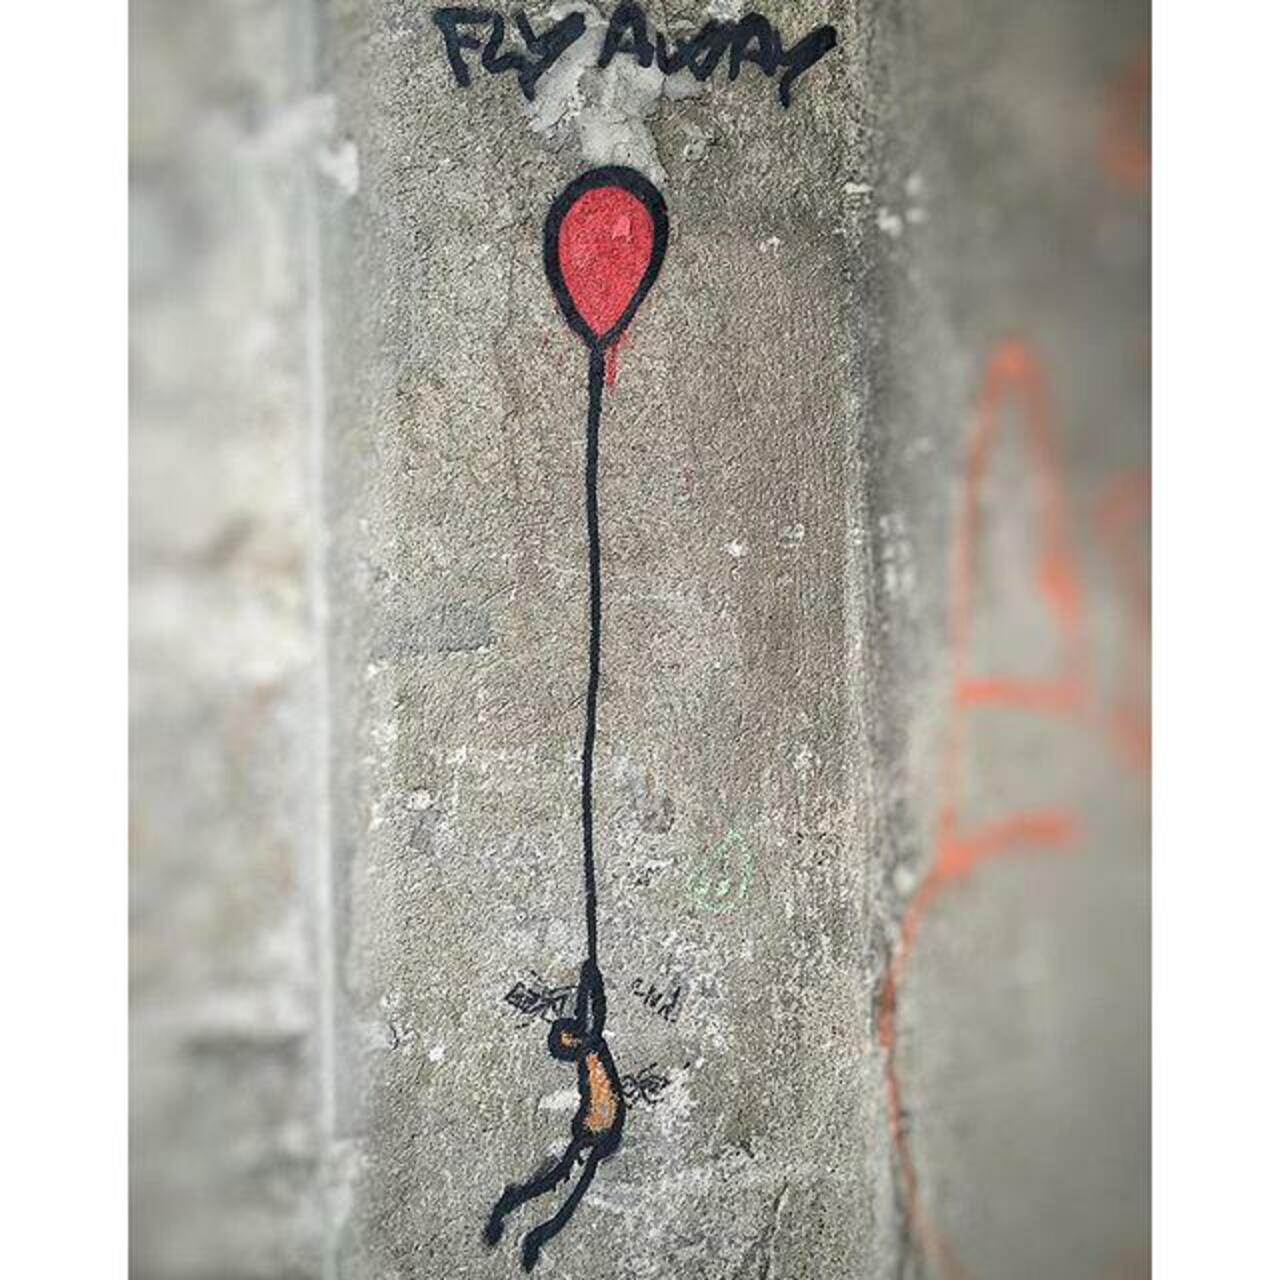 RT @LioKlingo: #murales #love #pisa #perchiancoracicrede #streetart #graffiti by lgfme http://t.co/hgzovfcbci